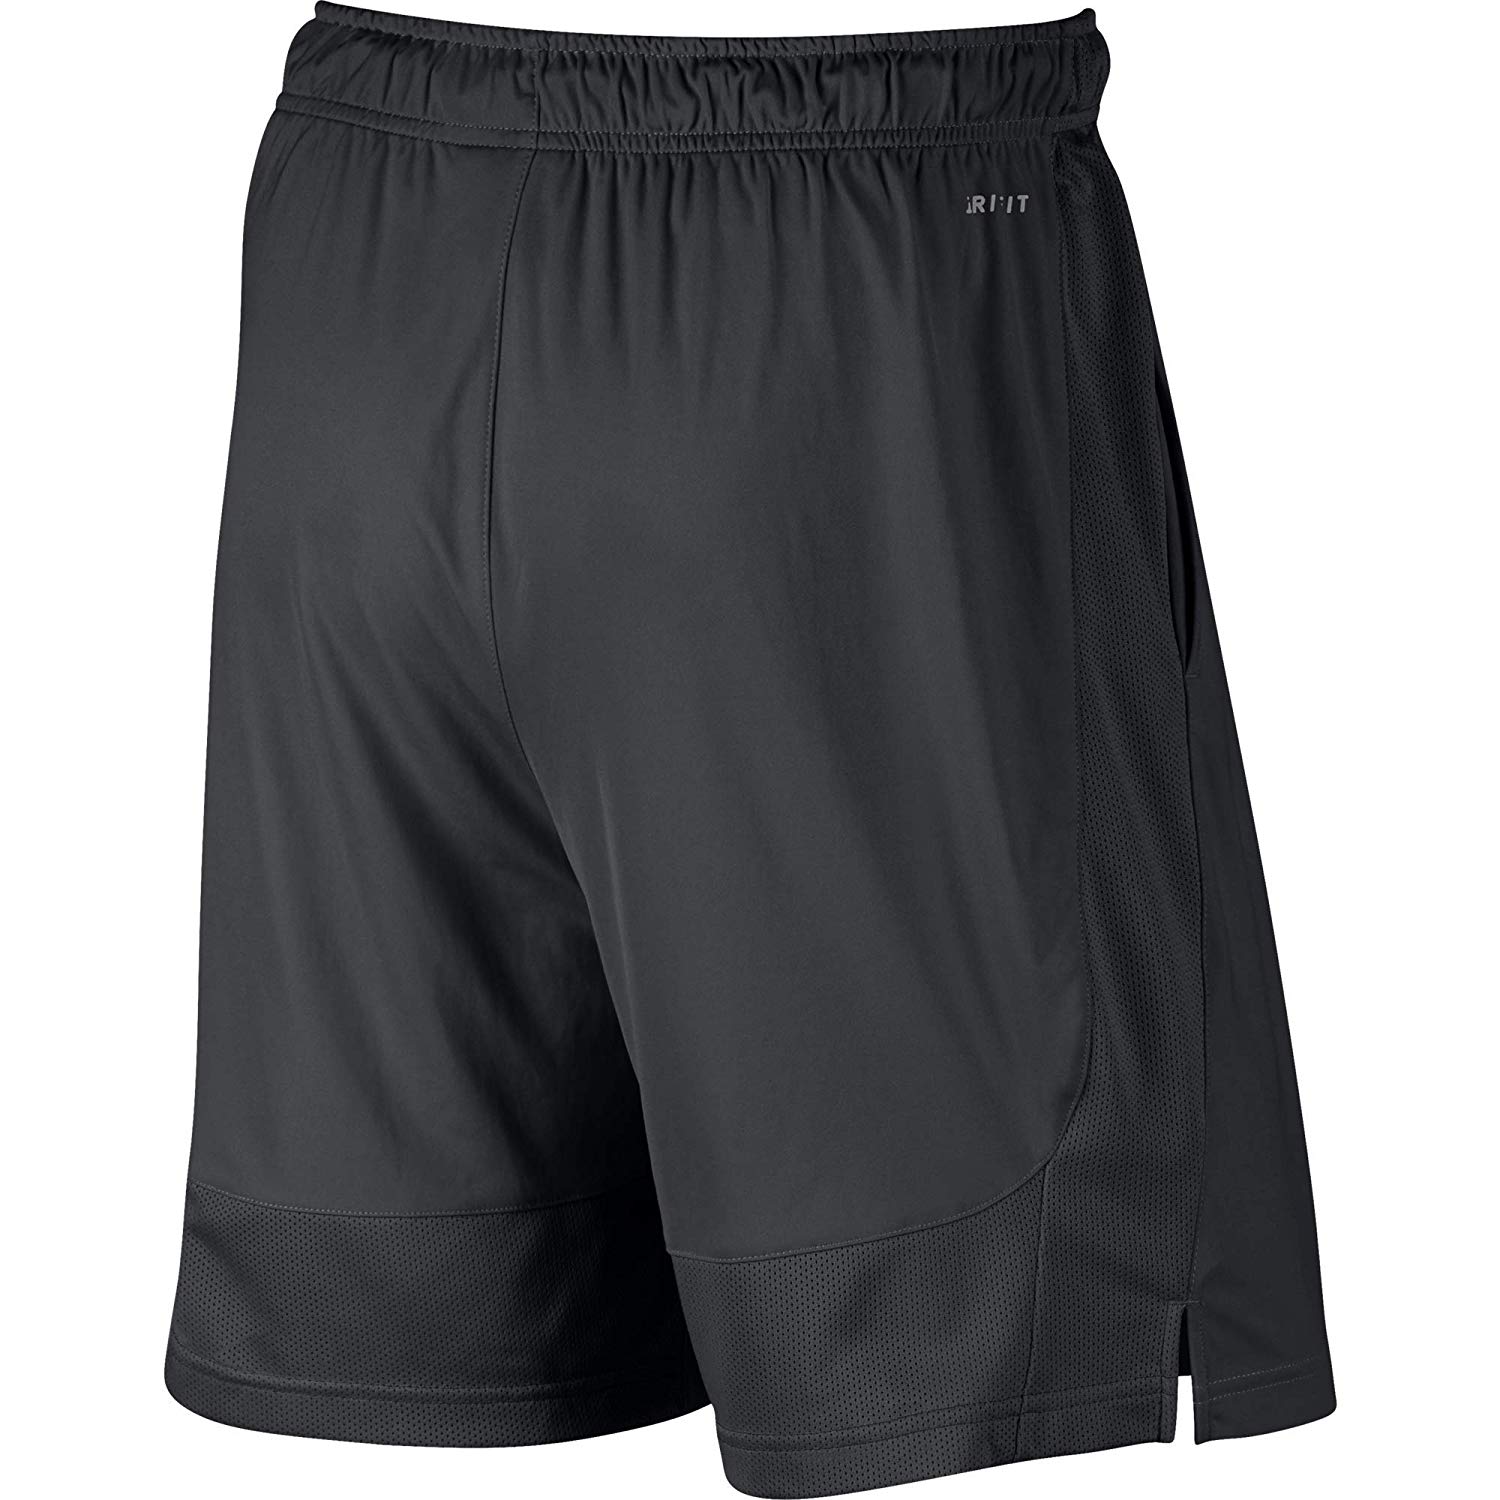 Nike Men's Dry Training Shorts,, Anthracite/Anthracite/Black, Size ...